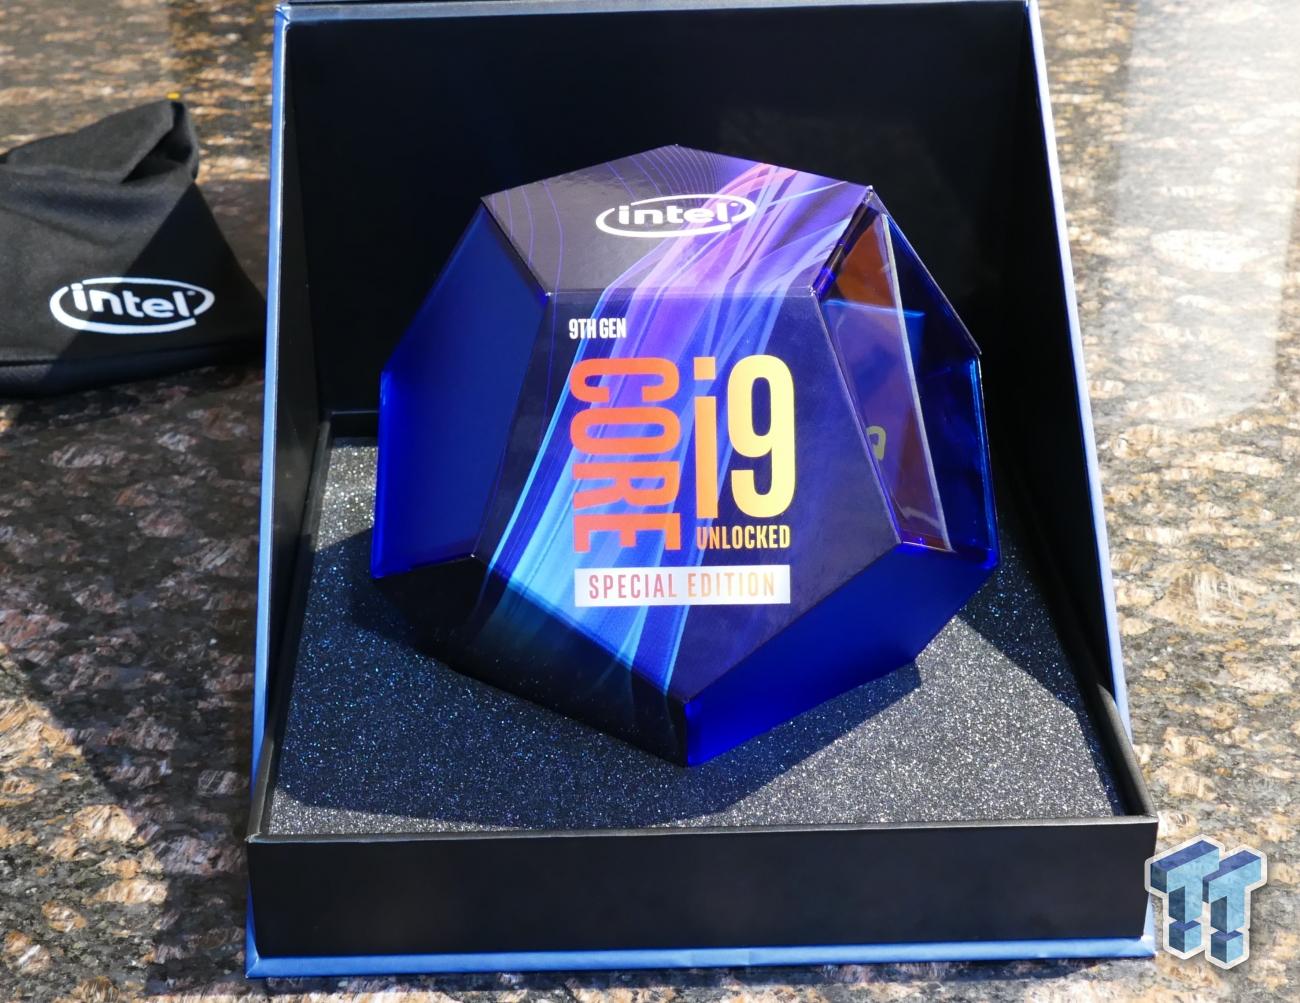 Intel Core i9-9900KS (Coffee Lake) Processor Review